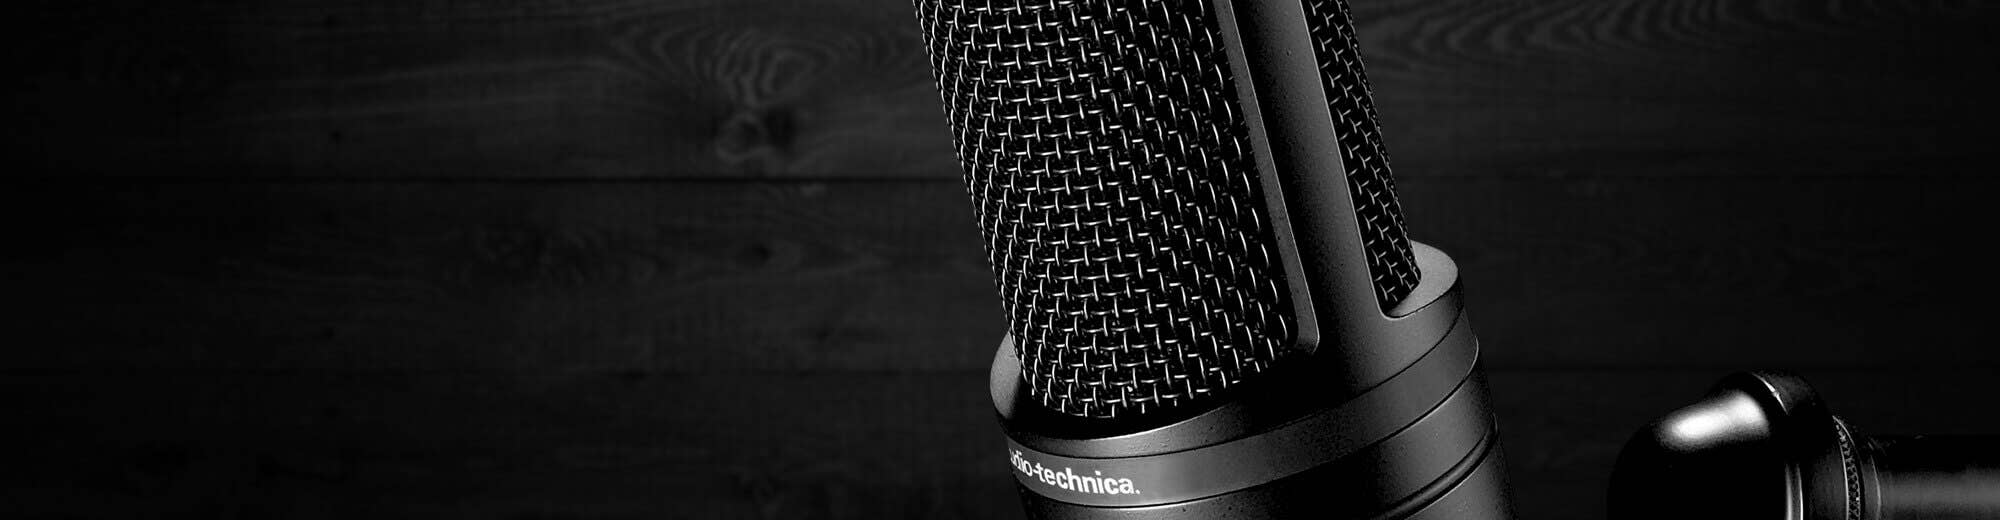 Podcasting y Voz en off